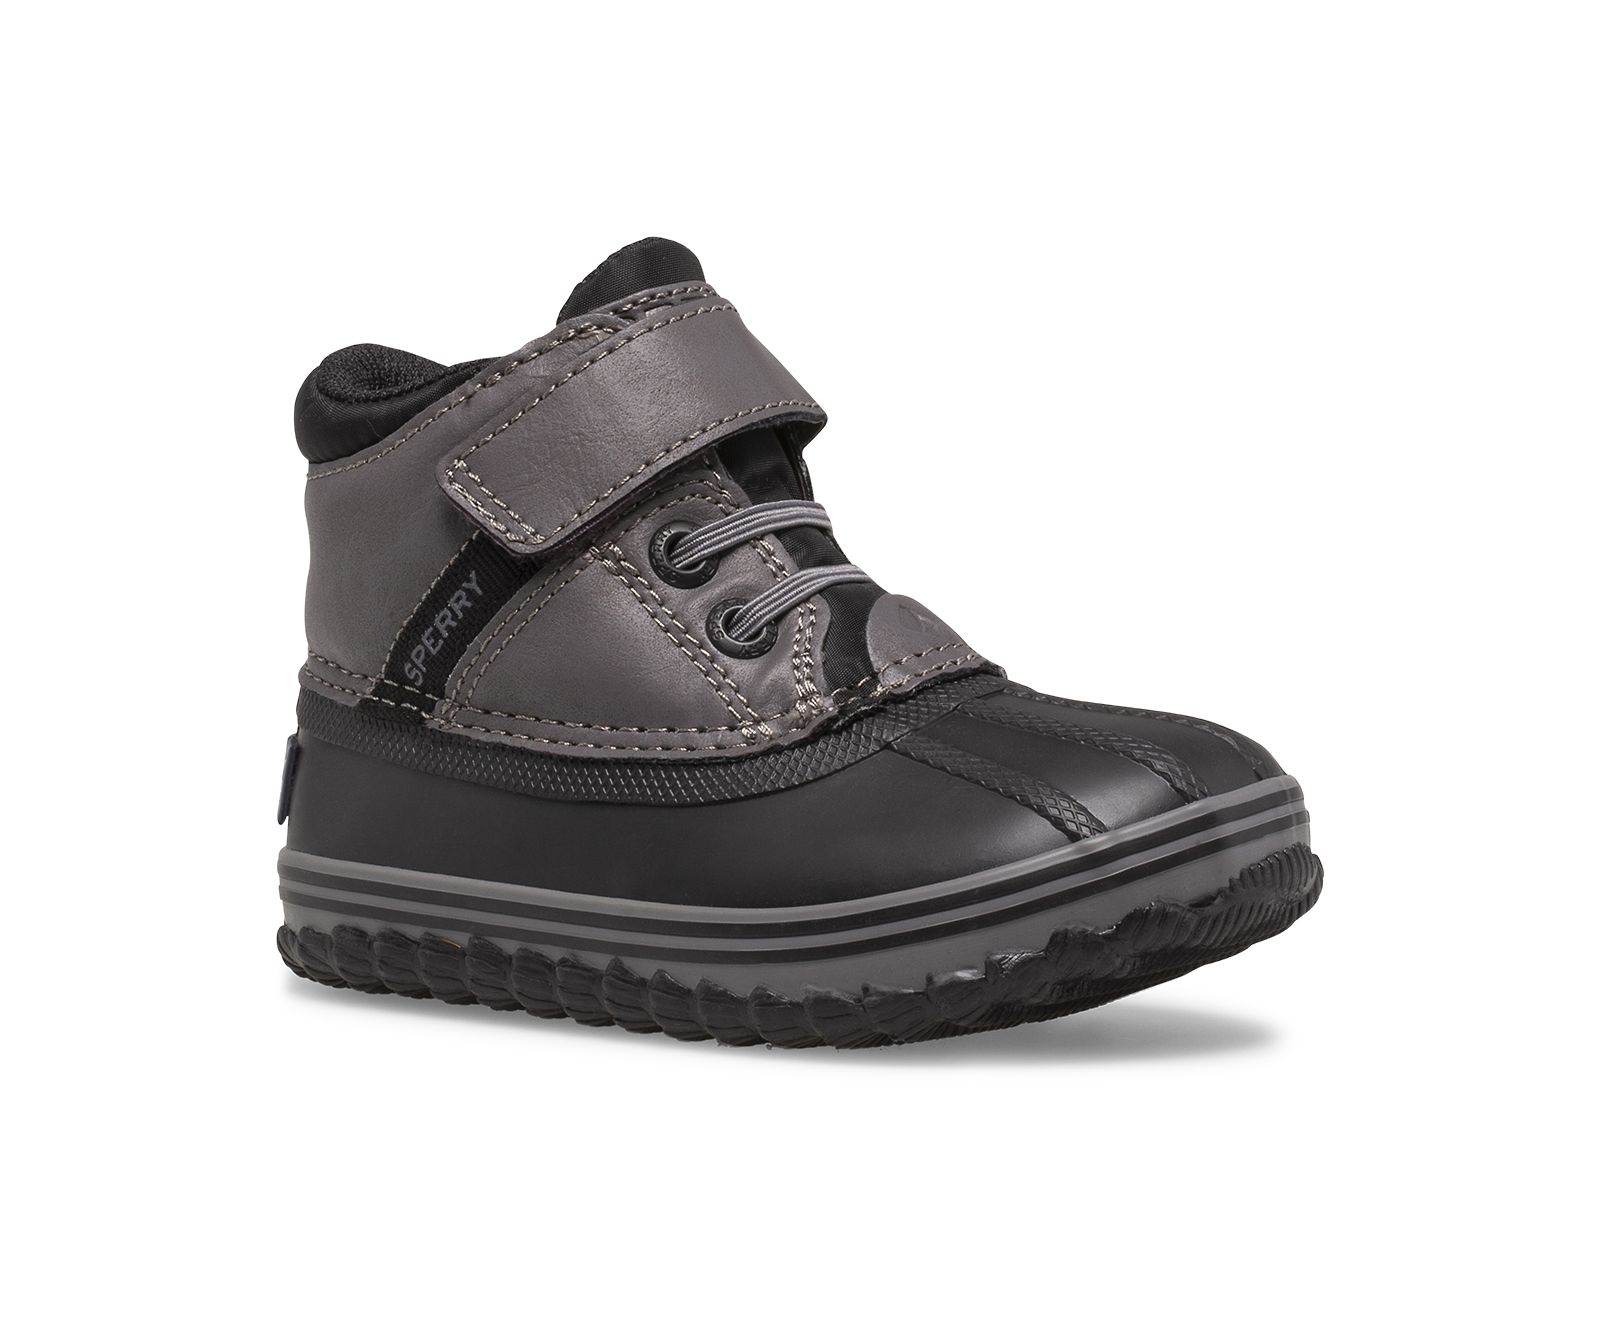 Little Kid's Bowline Storm Junior Boot - Black/Charcoal